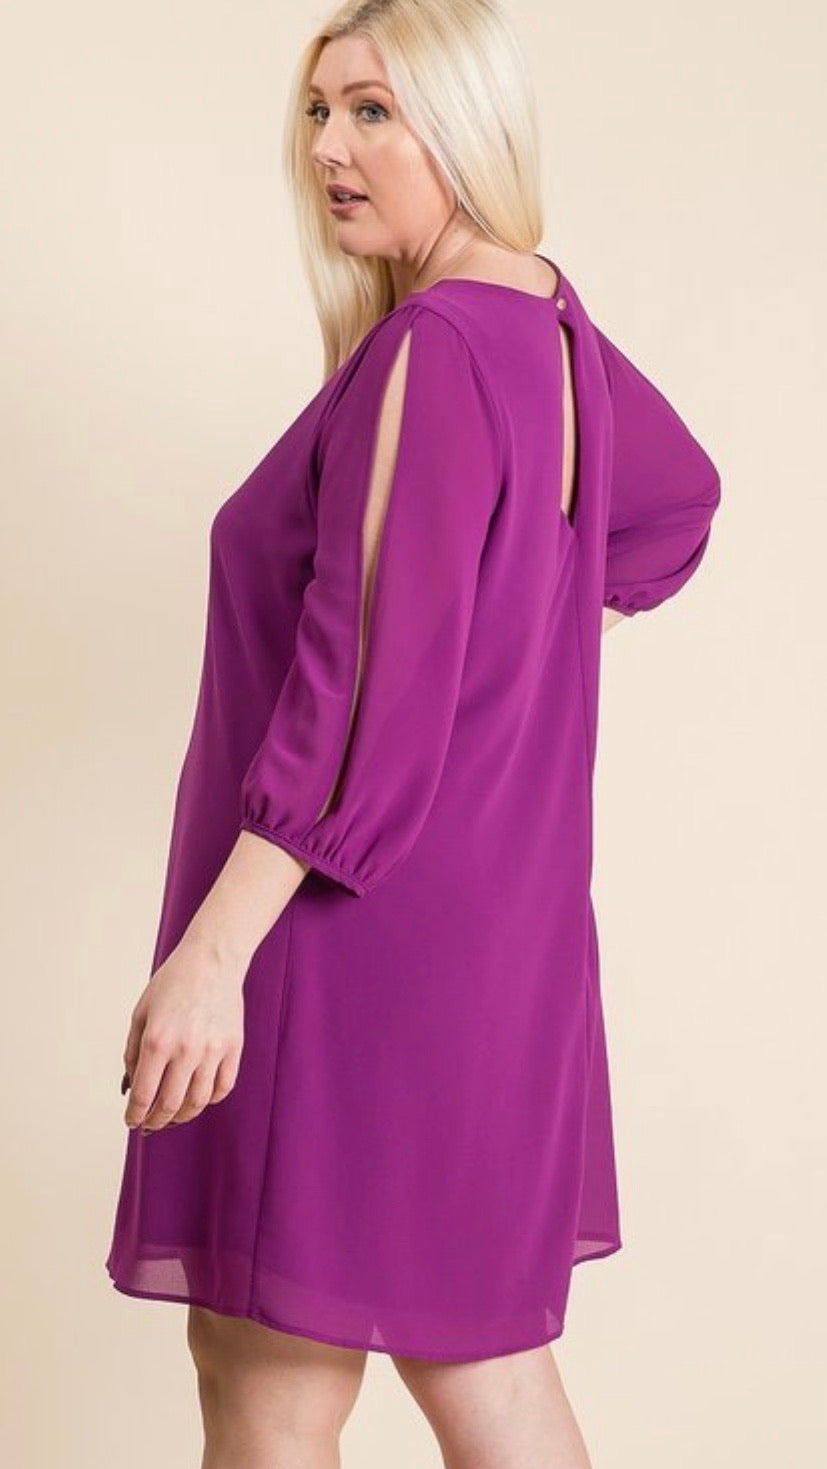 Elizabeth Elegant Split Sleeve Dress (Plus) - Corinne an Affordable Women's Clothing Boutique in the US USA